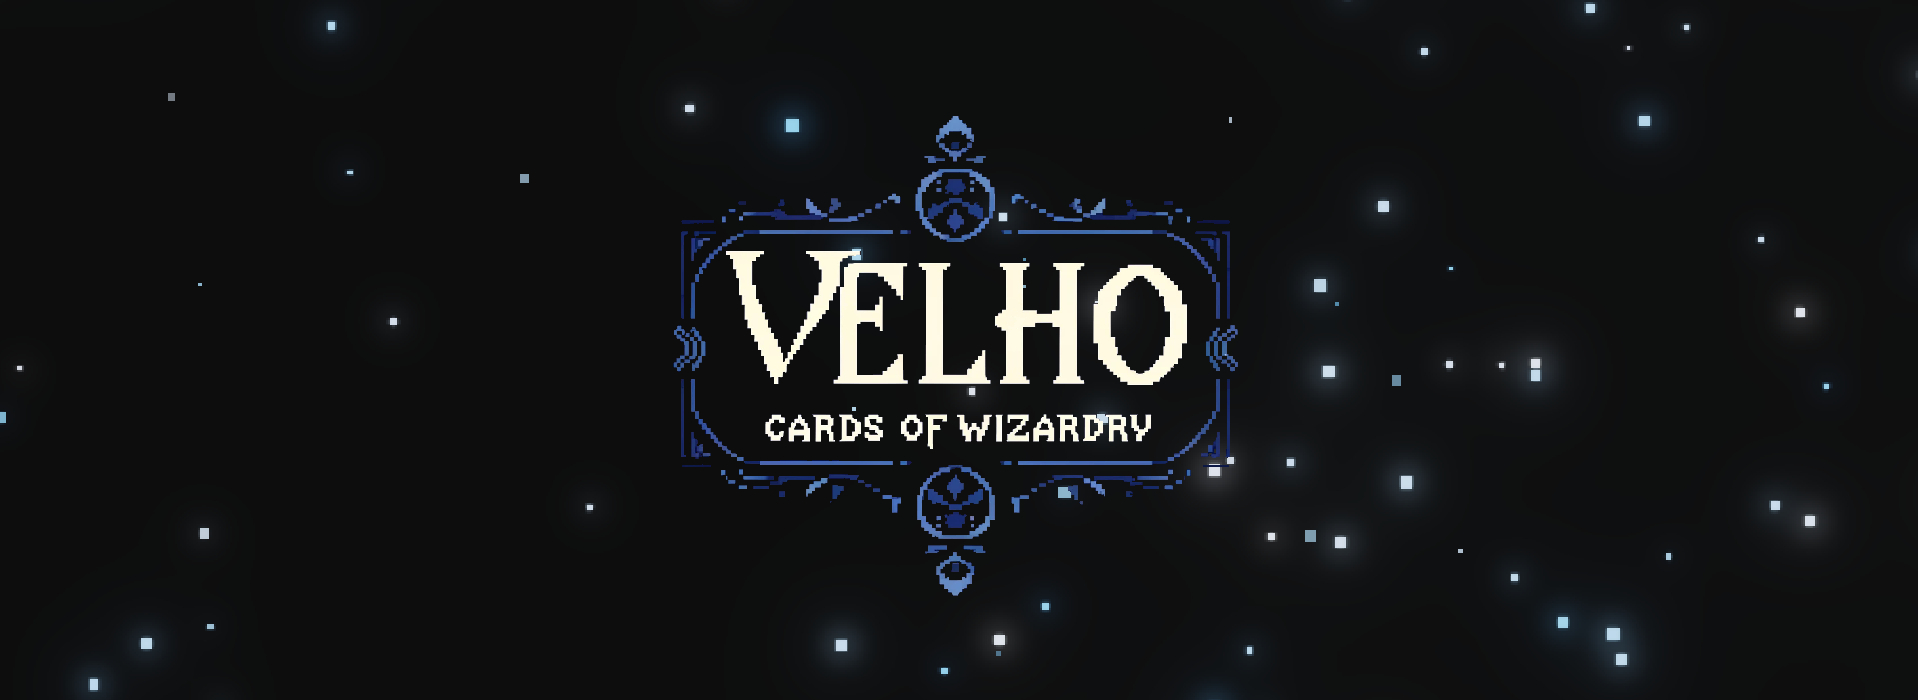 VELHO - Cards of Wizardry